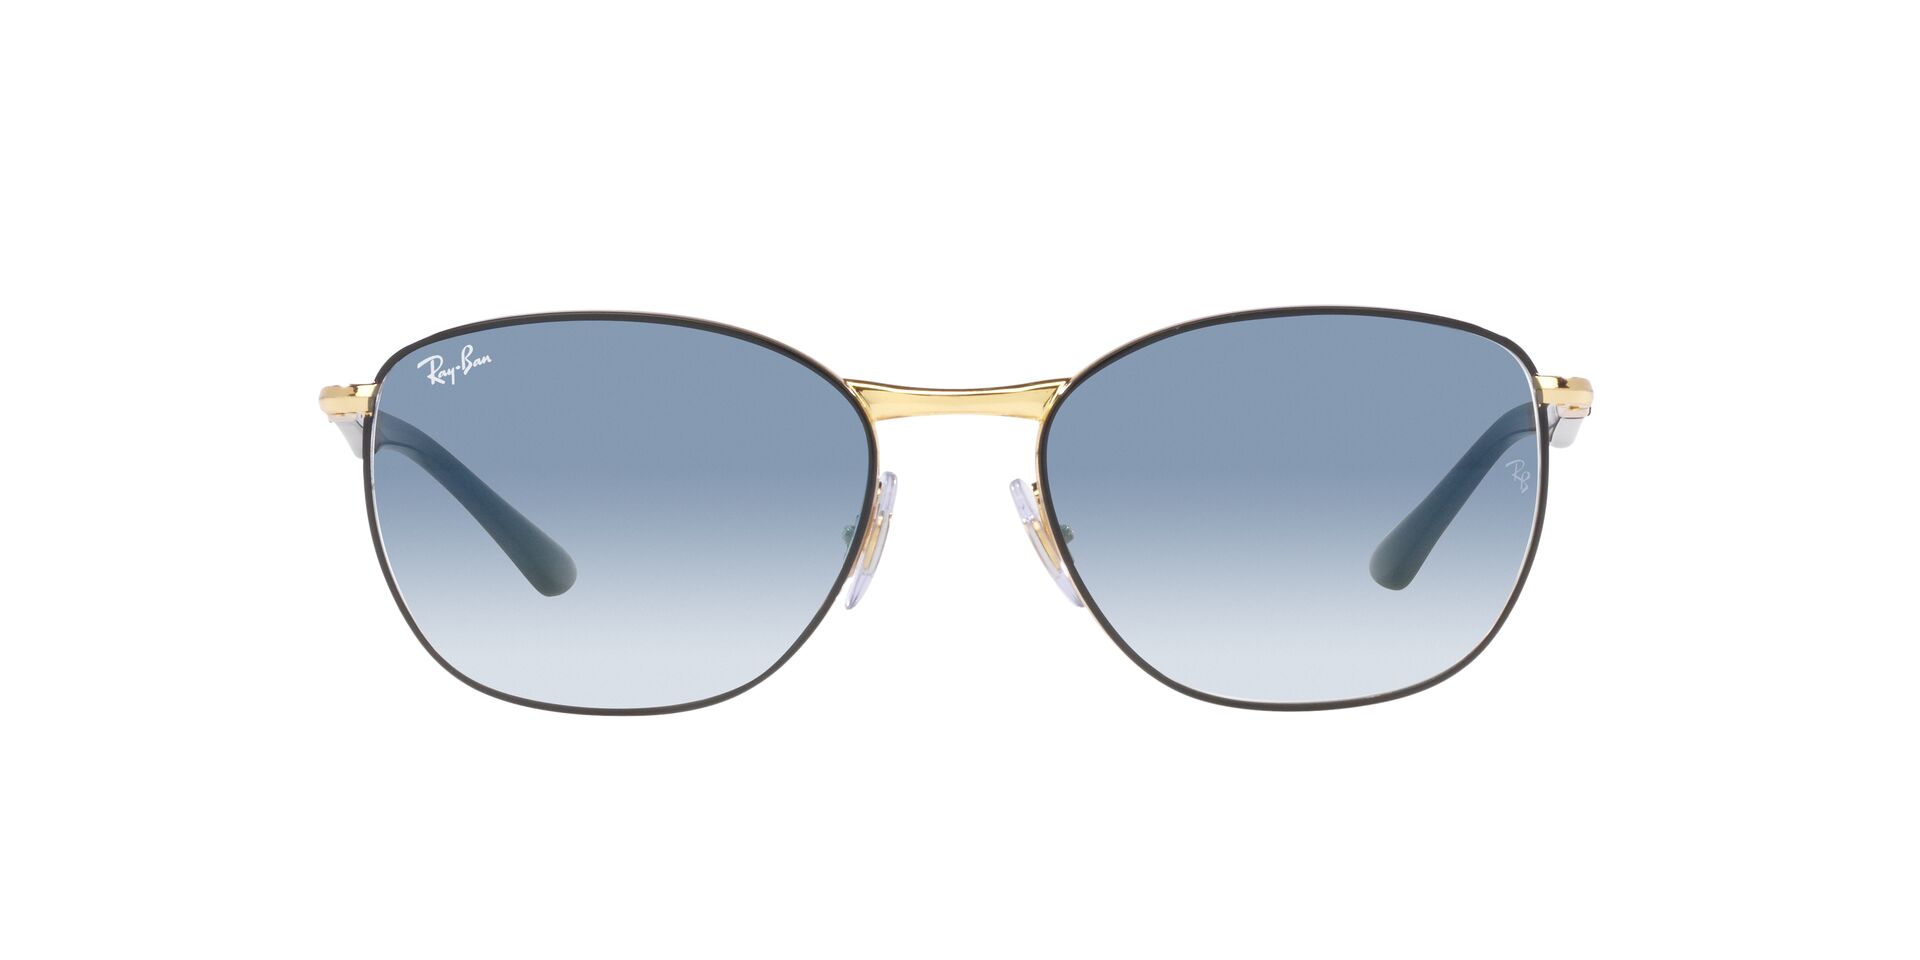 Buy Ray-Ban Ray-Ban Sunglasses | Gunmetal Sunglasses ( 0Rb3025 | Pilot |  Gunmetal Frame | Grey Lens ) Sunglasses Online.